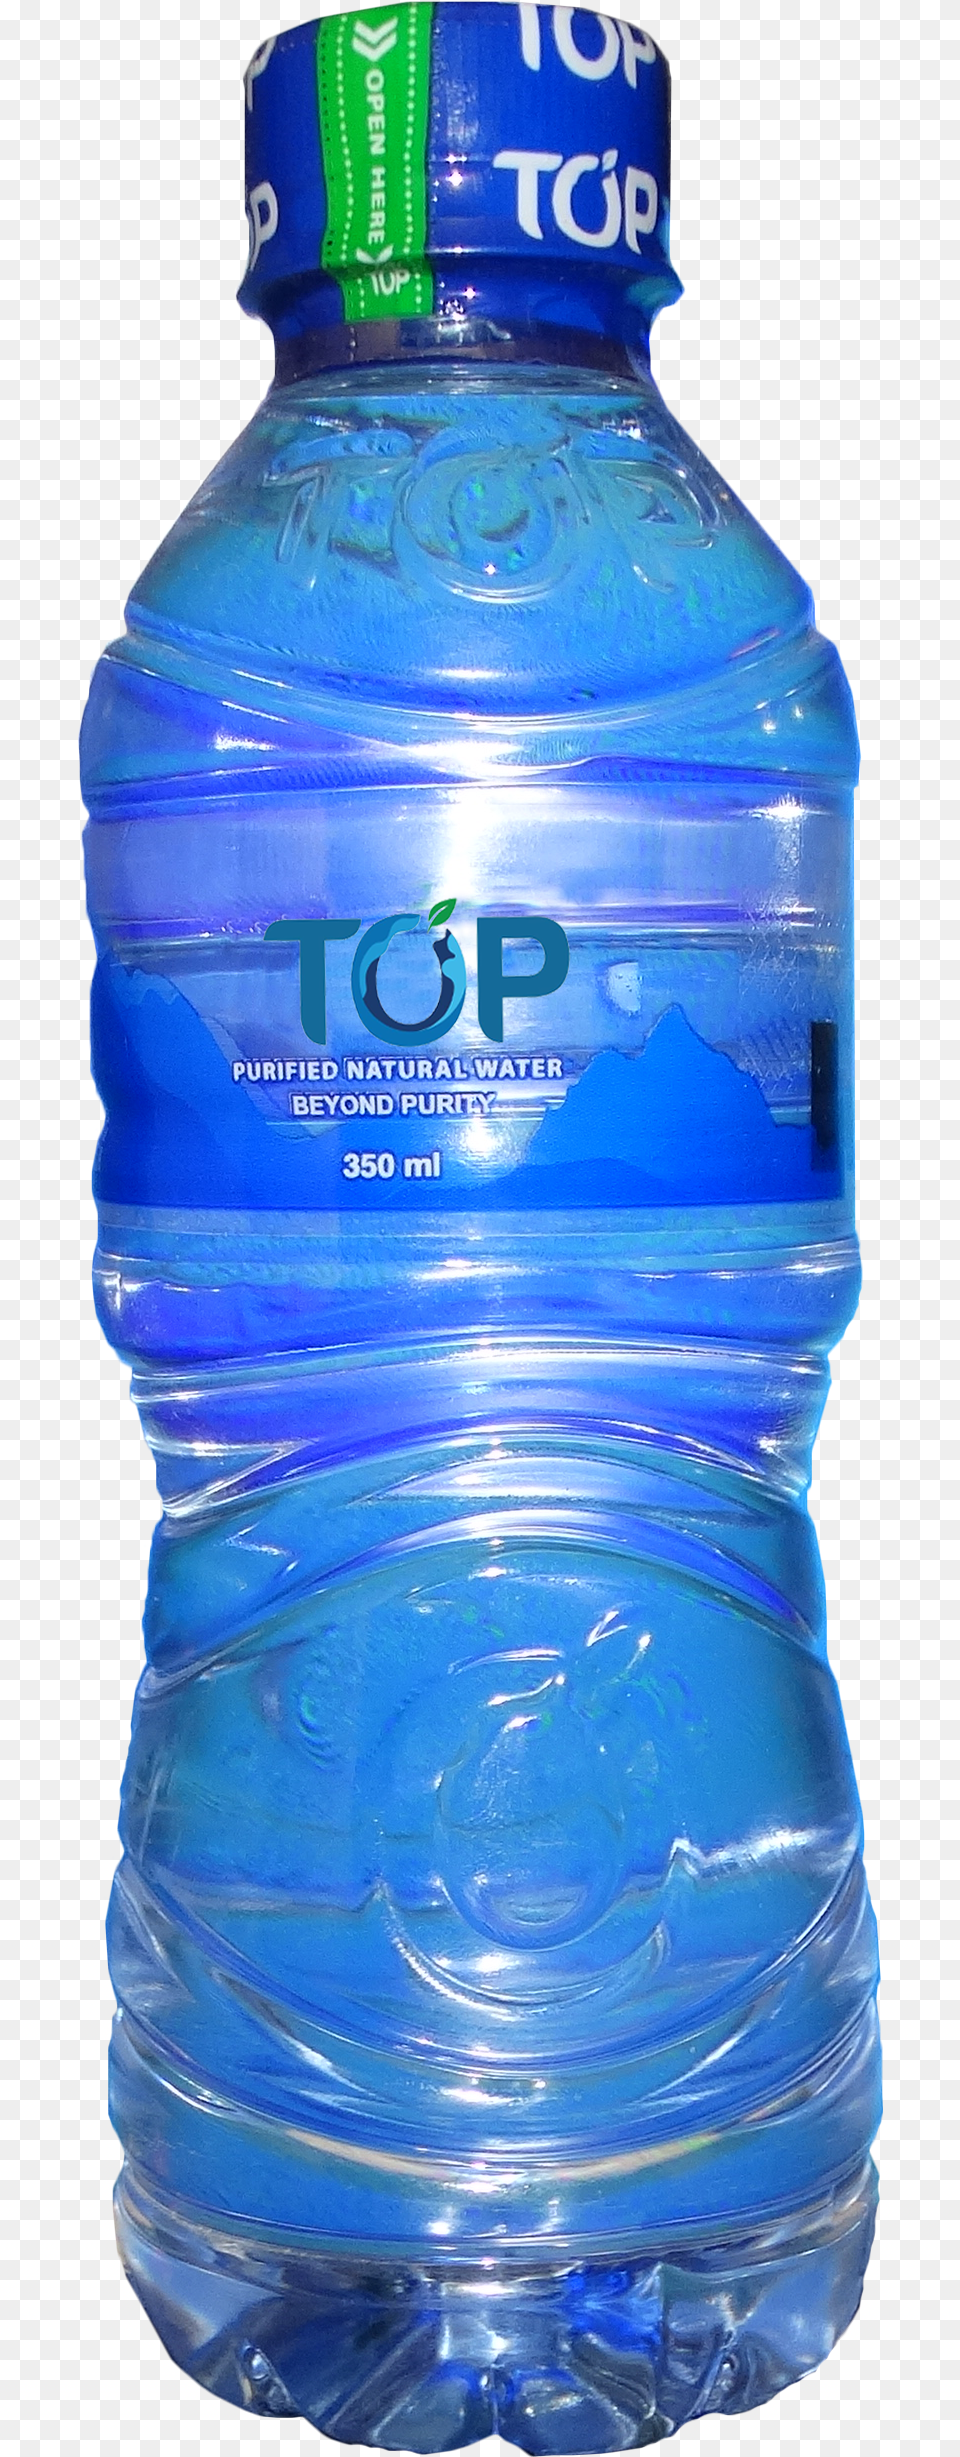 Liter Top Water Ethiopia, Bottle, Water Bottle, Beverage, Mineral Water Png Image